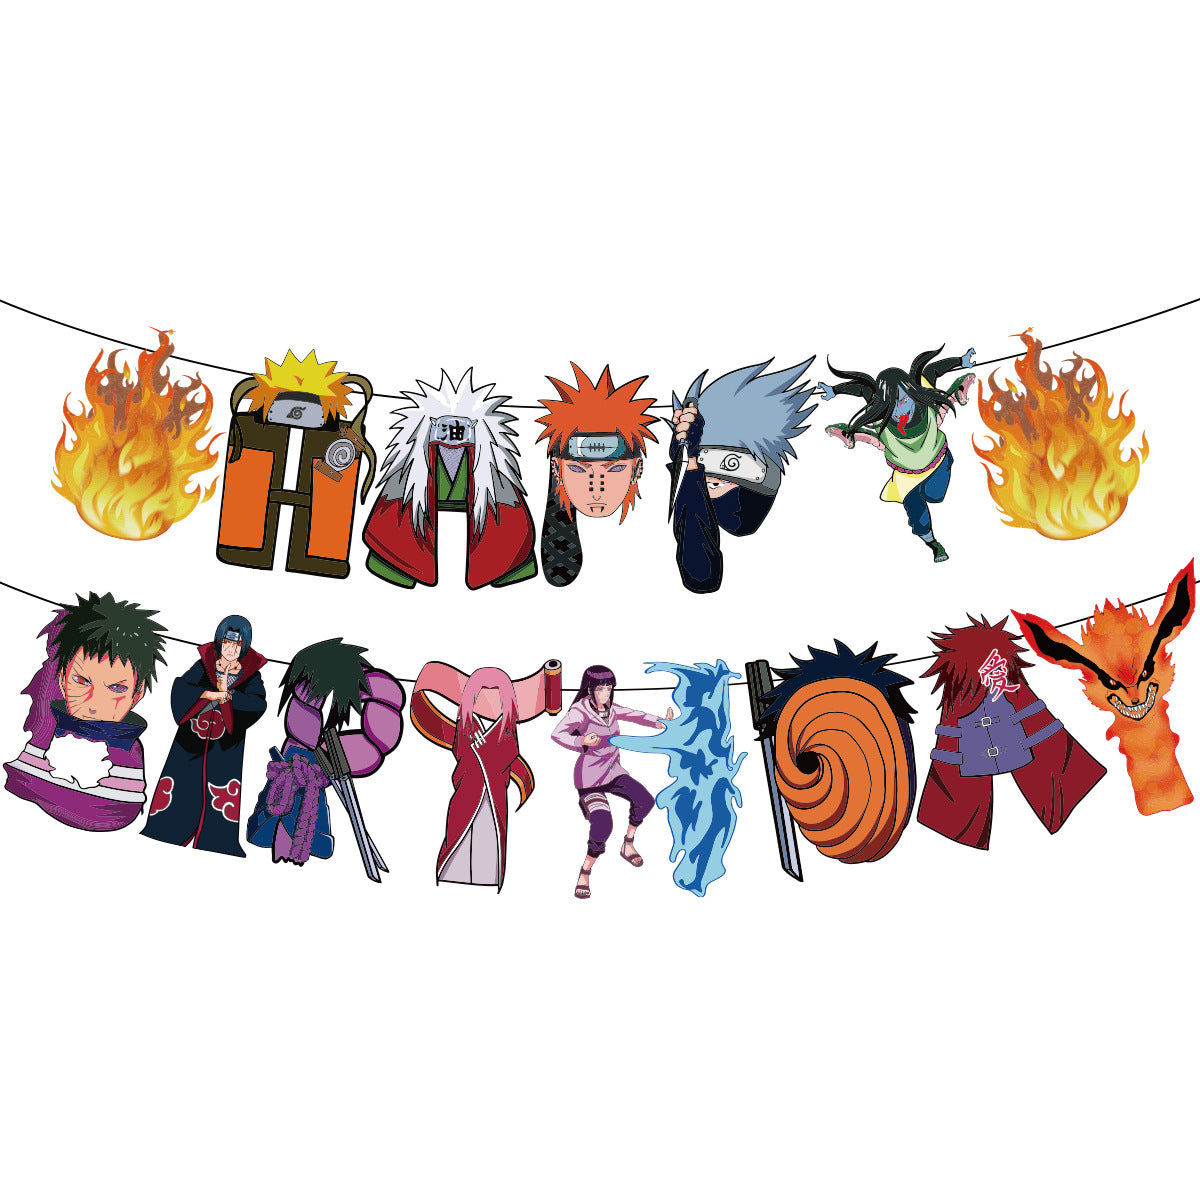 Naruto Birthday Party Supplies